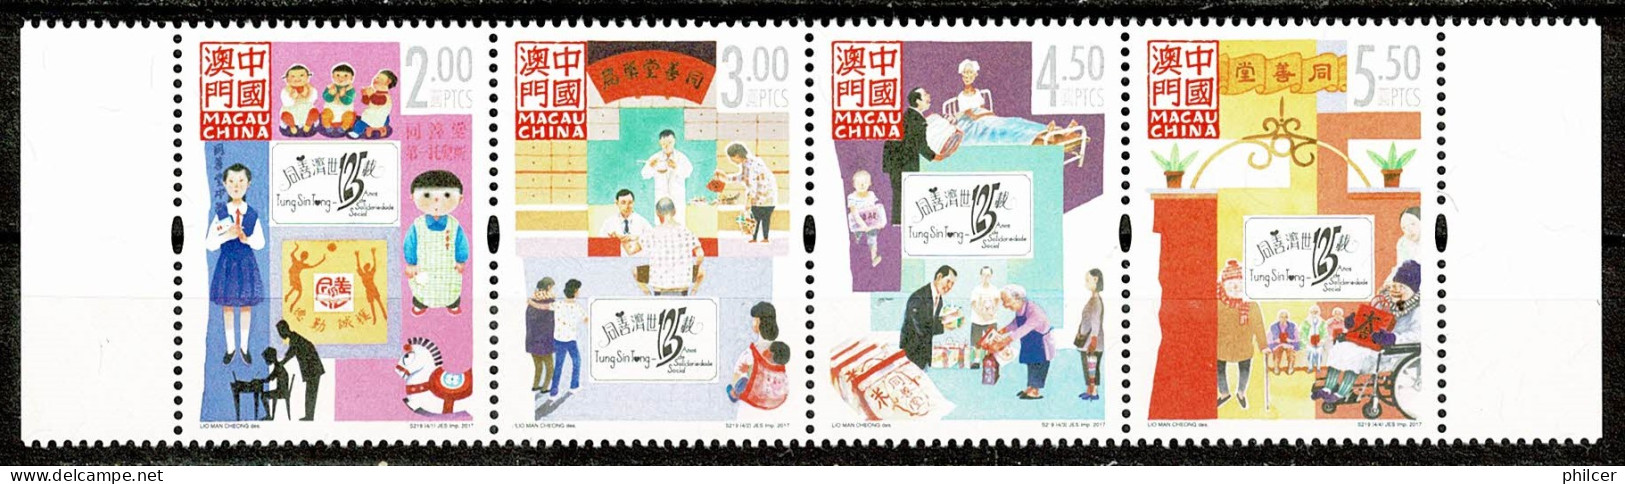 Macau, 2017, Tung Sin Tong, 125 Anos De Solidariedade Social, MNH - Unused Stamps